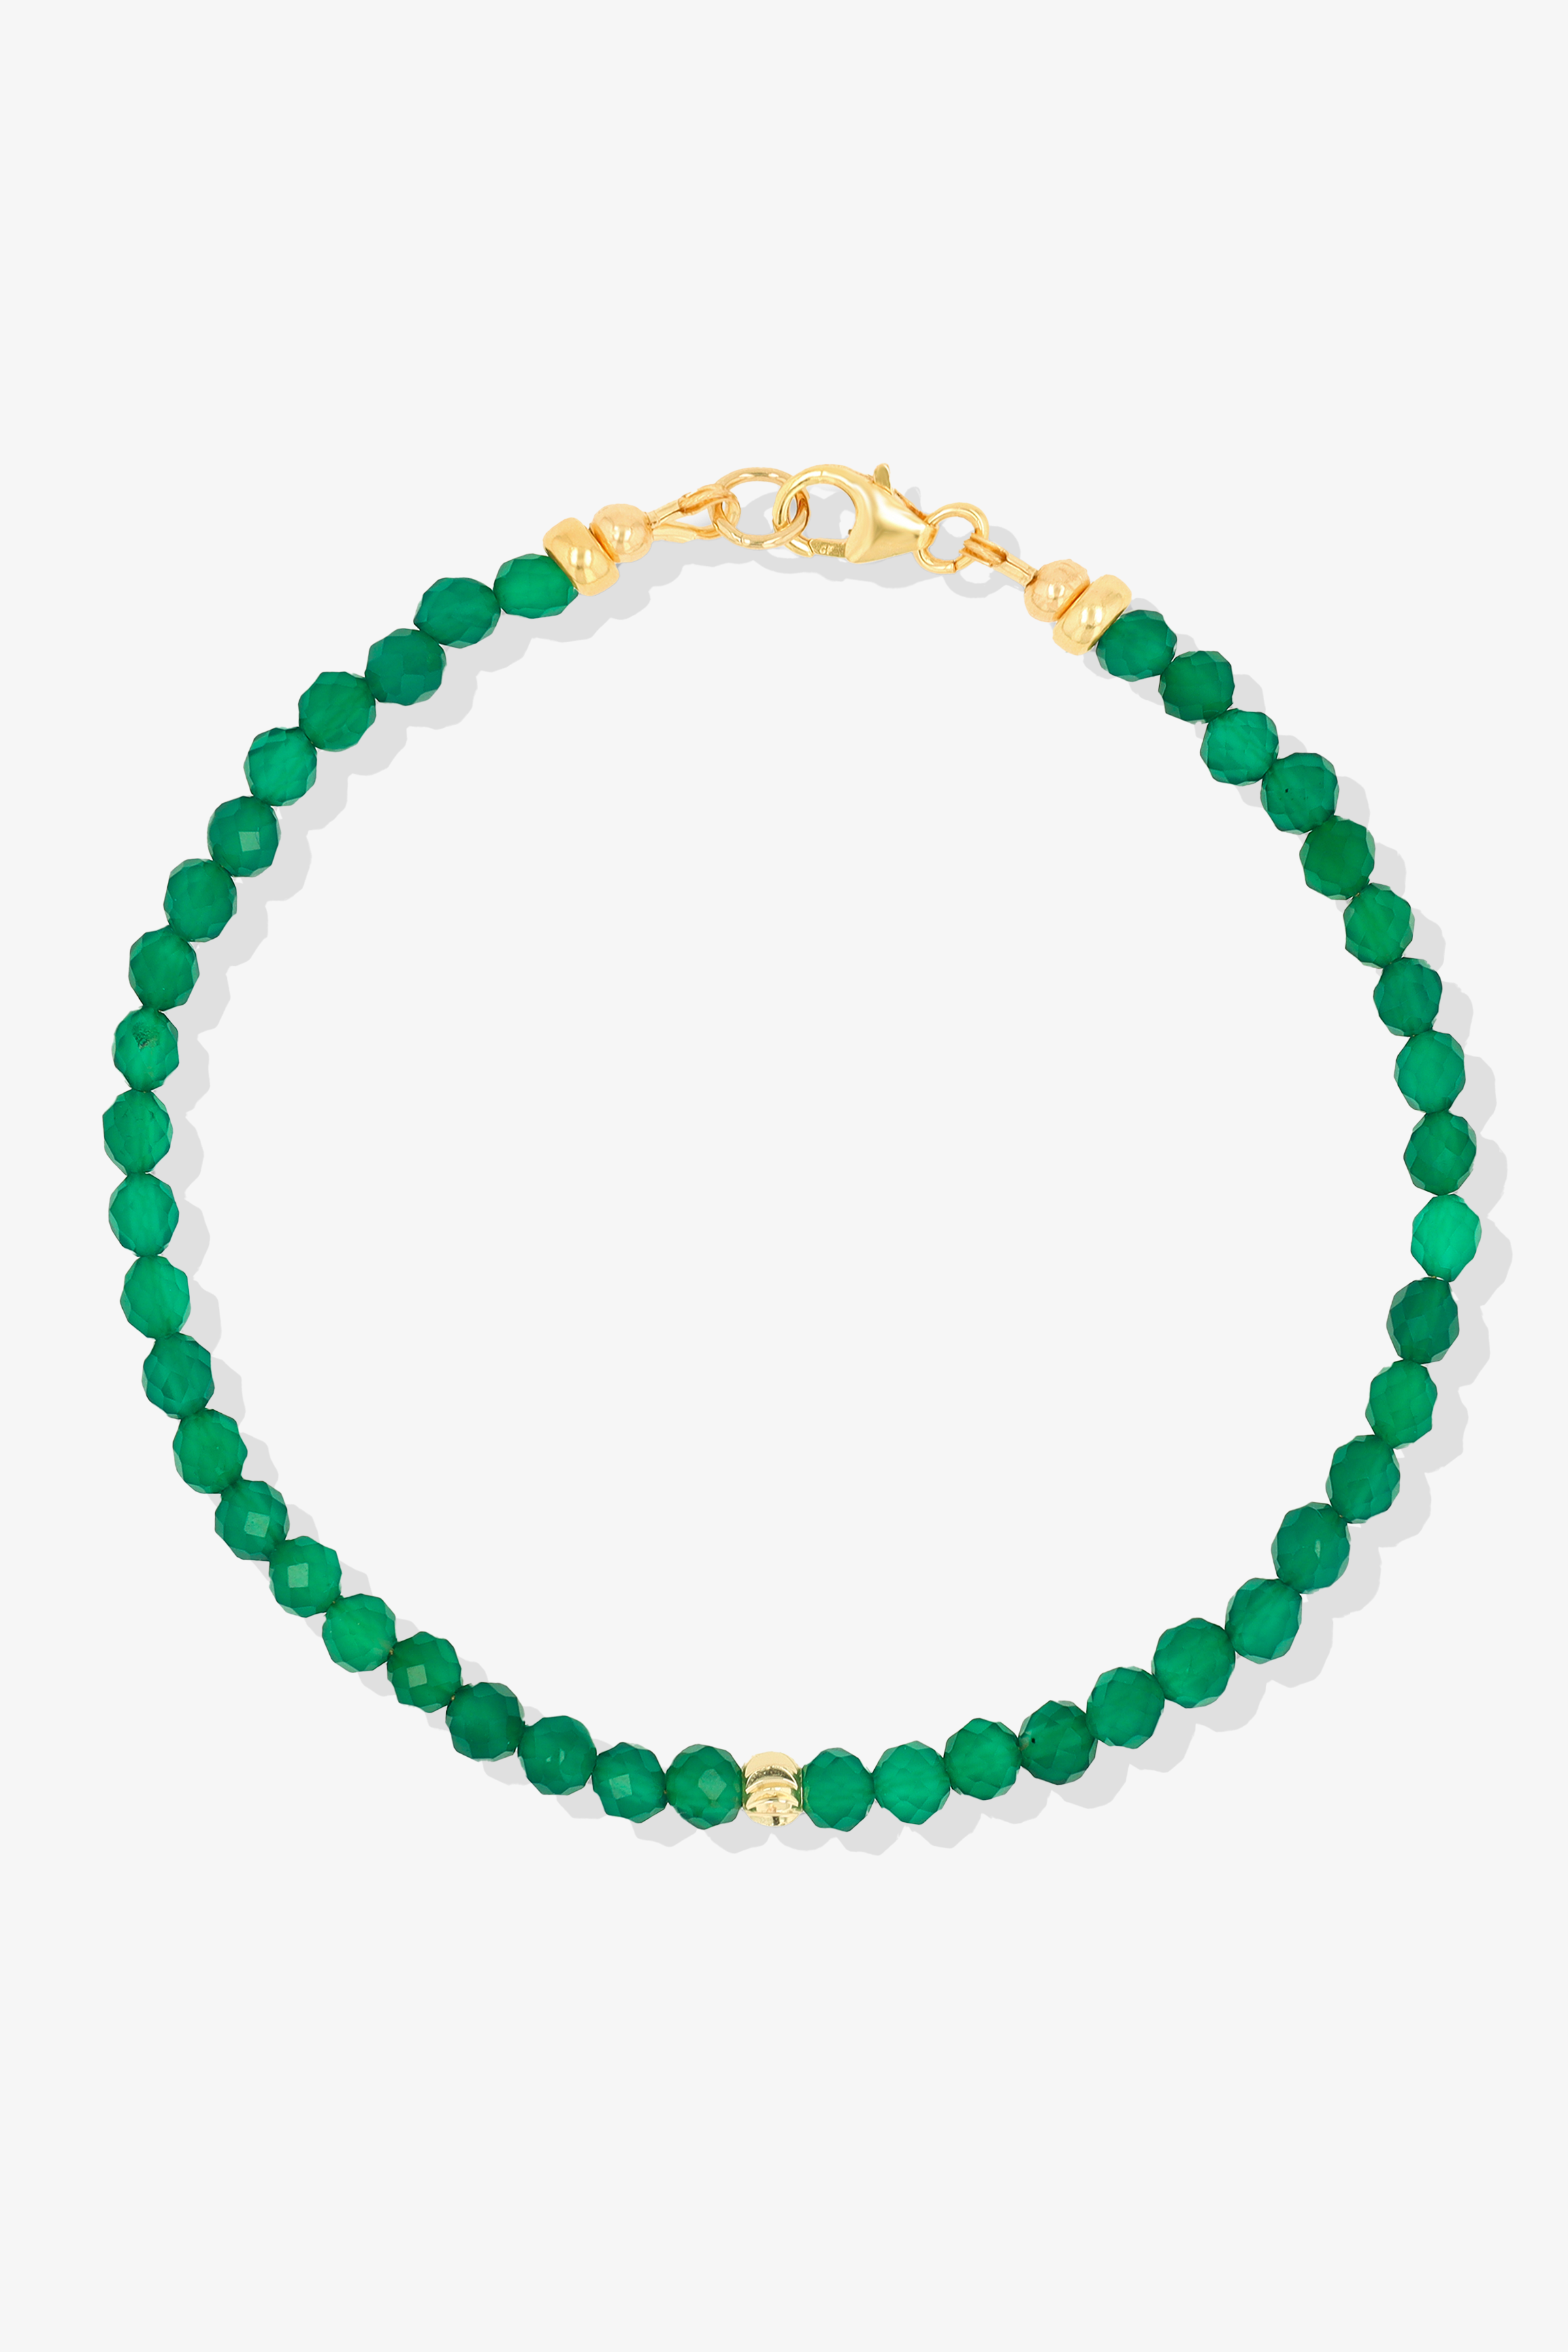 Destiny Mini Beaded Gemstone Gold Vermeil Bracelet Green Aventurine - Growth